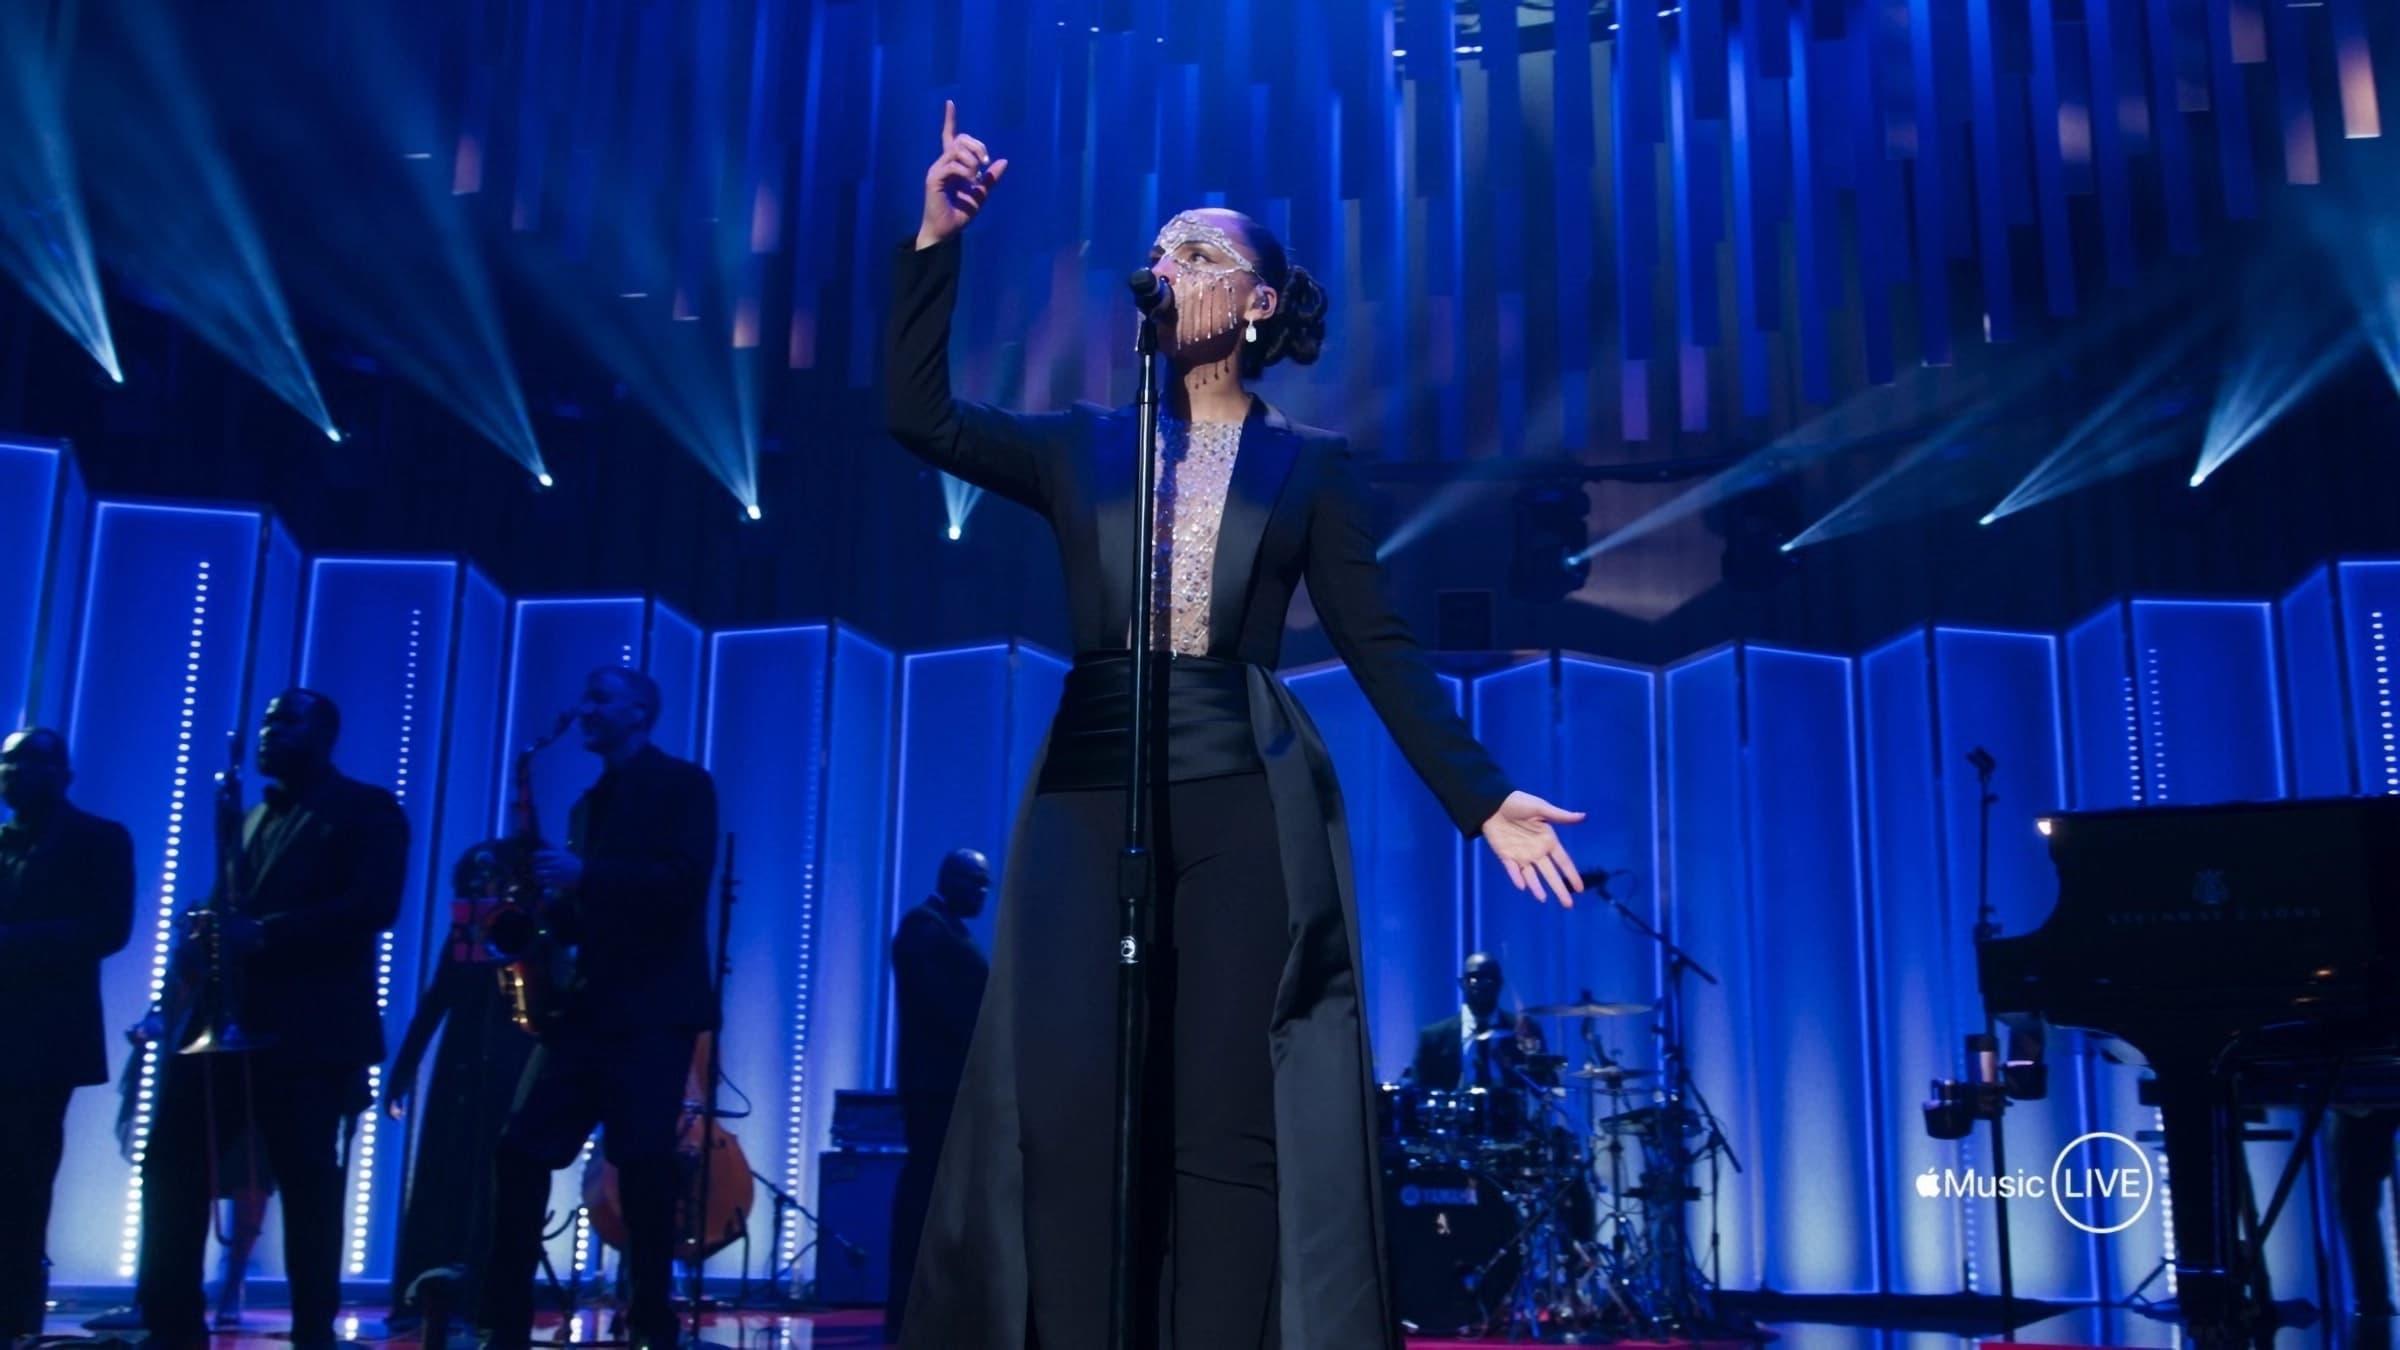 Apple Music Live: Alicia Keys backdrop